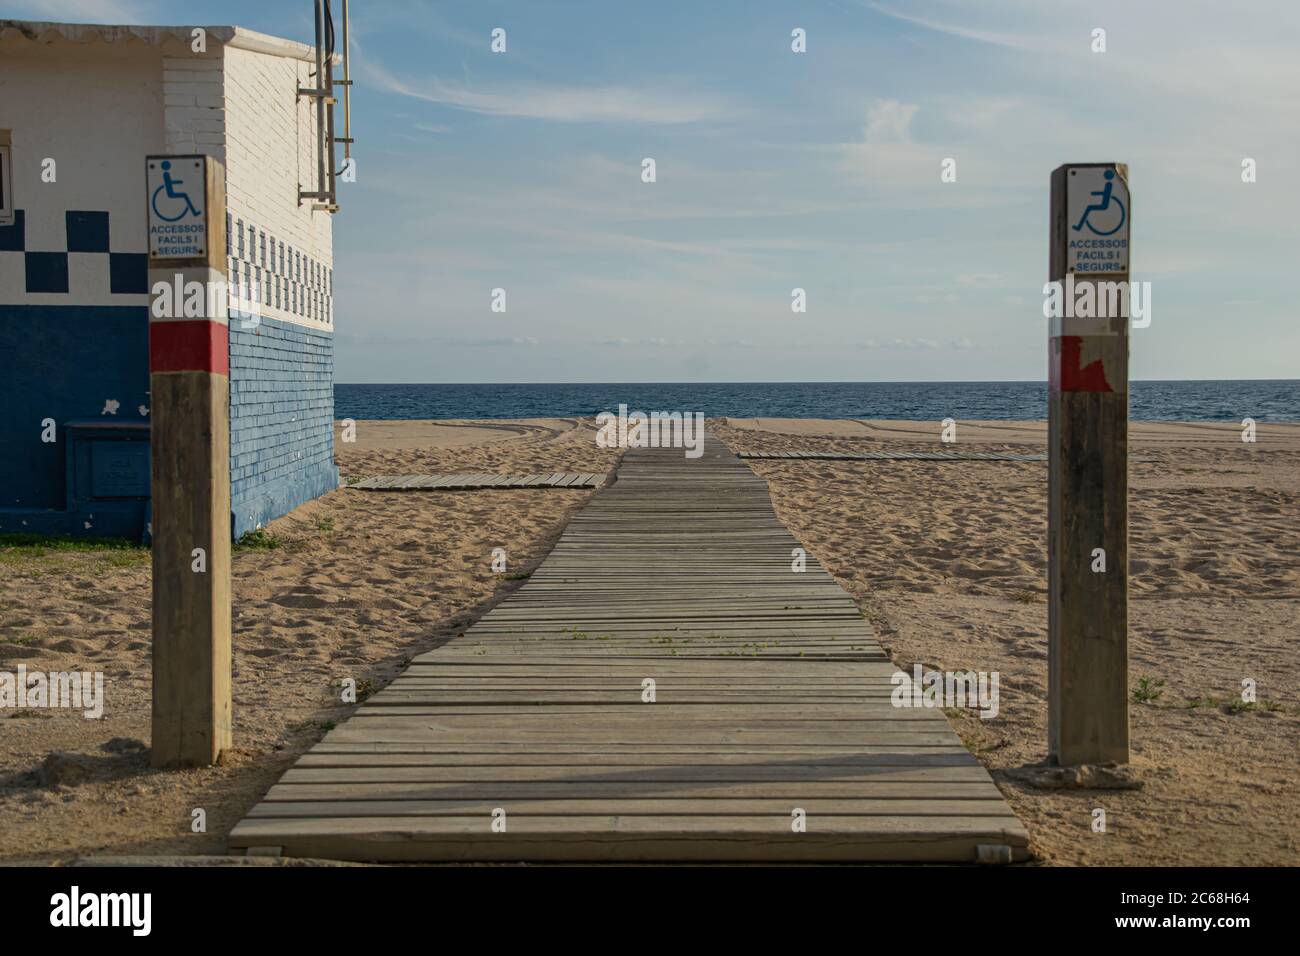 Entrance to beach and sea background, Calelia, Spain, 2019 Stock Photo